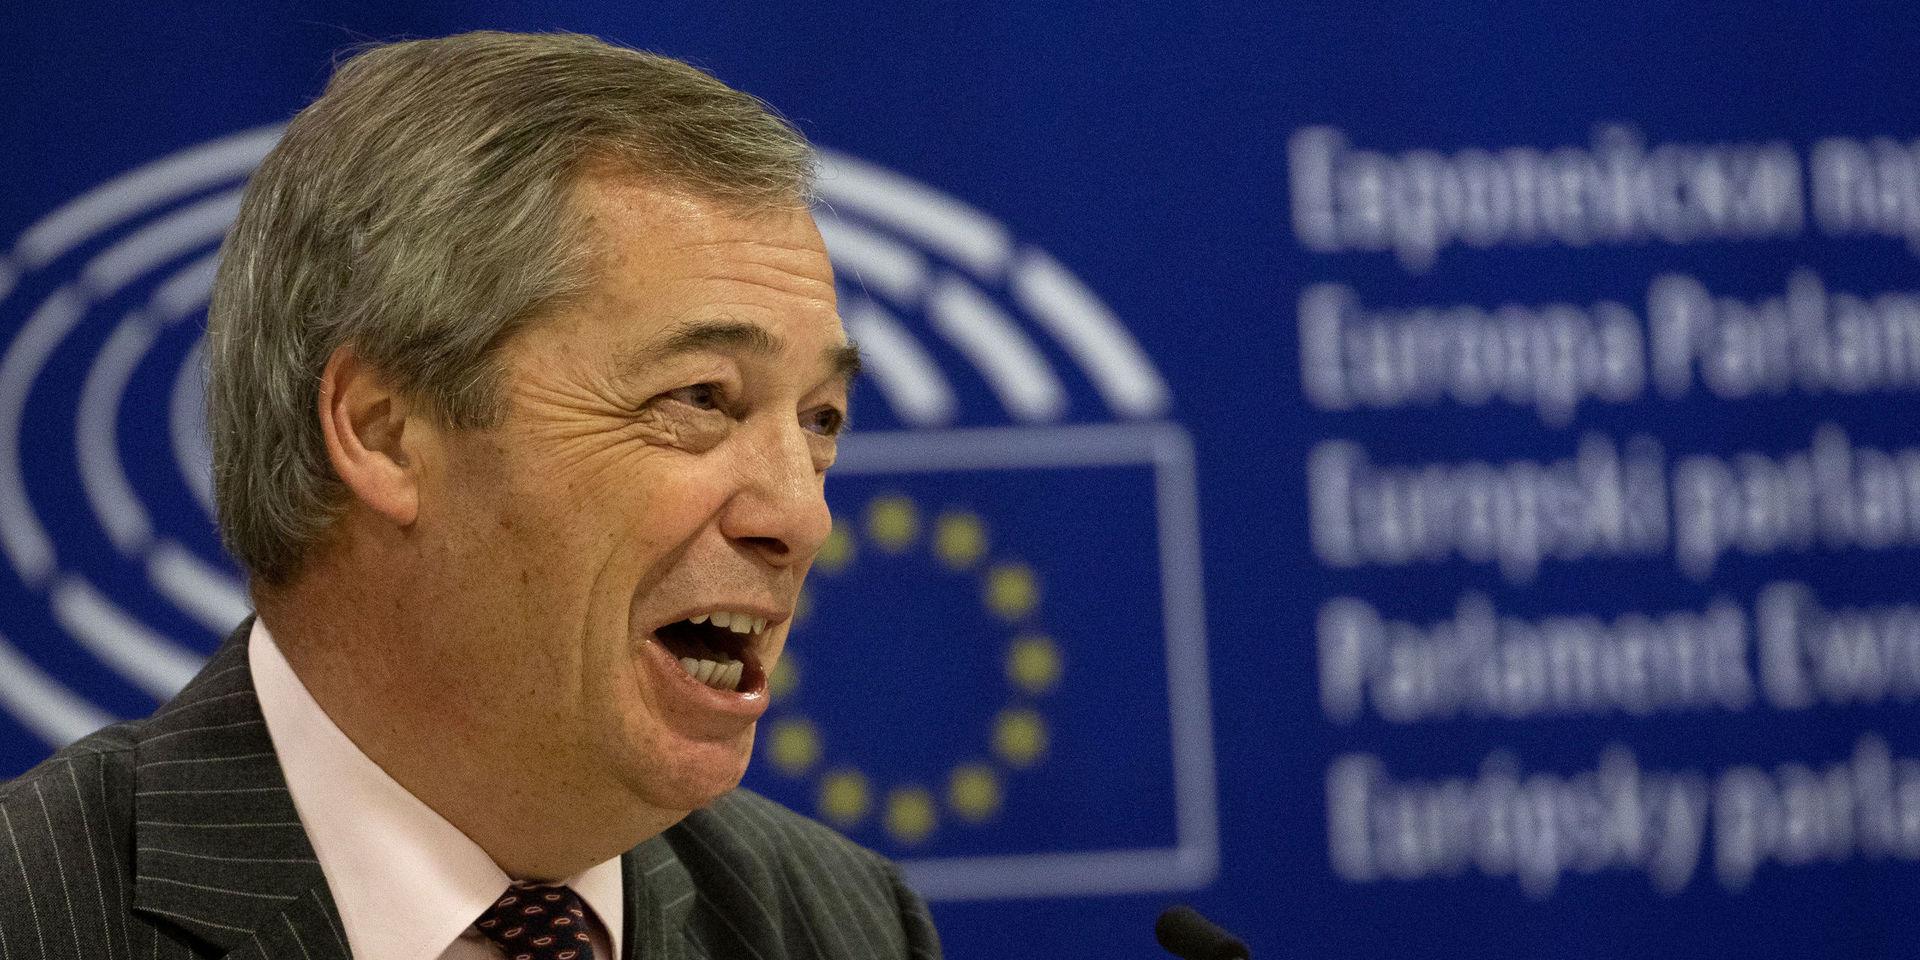 Brexitpartiets ledare Nigel Farage på sin sista presskonferens i Bryssel.